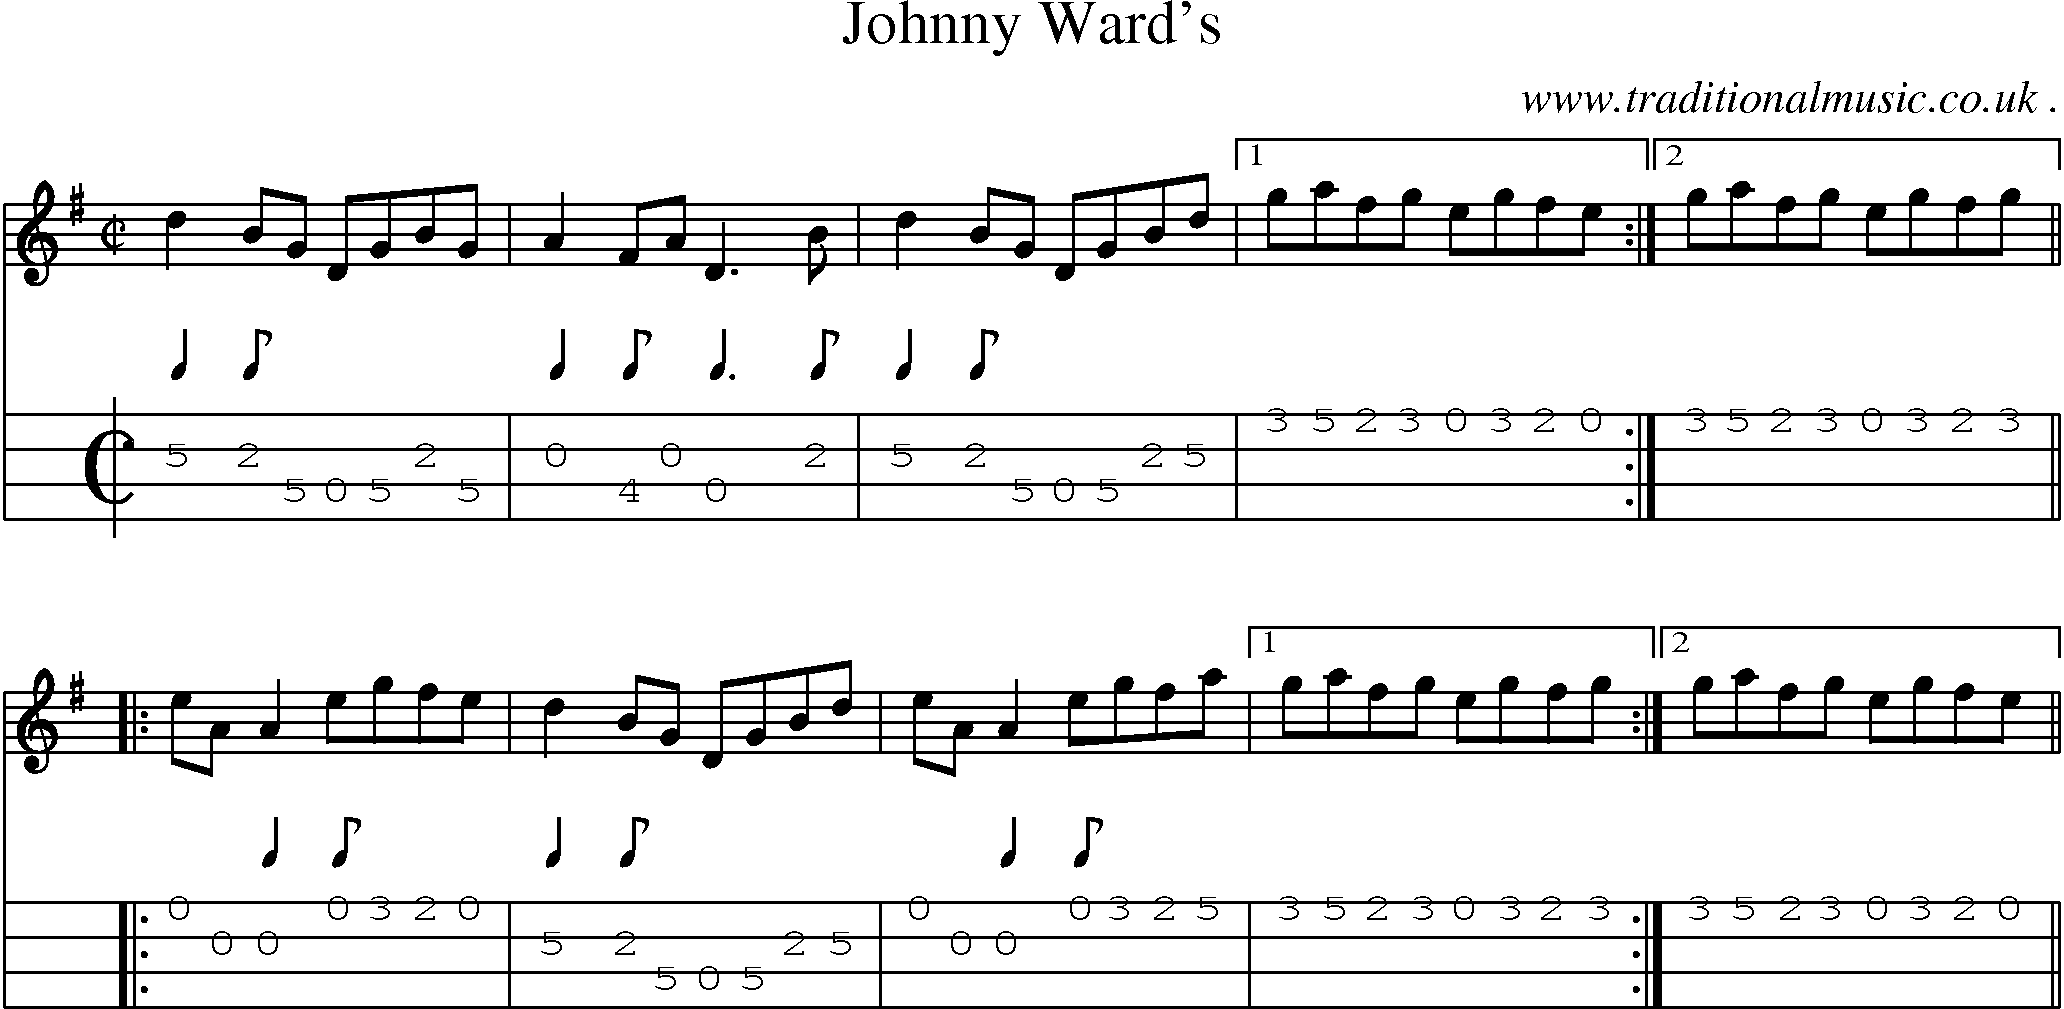 Sheet-Music and Mandolin Tabs for Johnny Wards